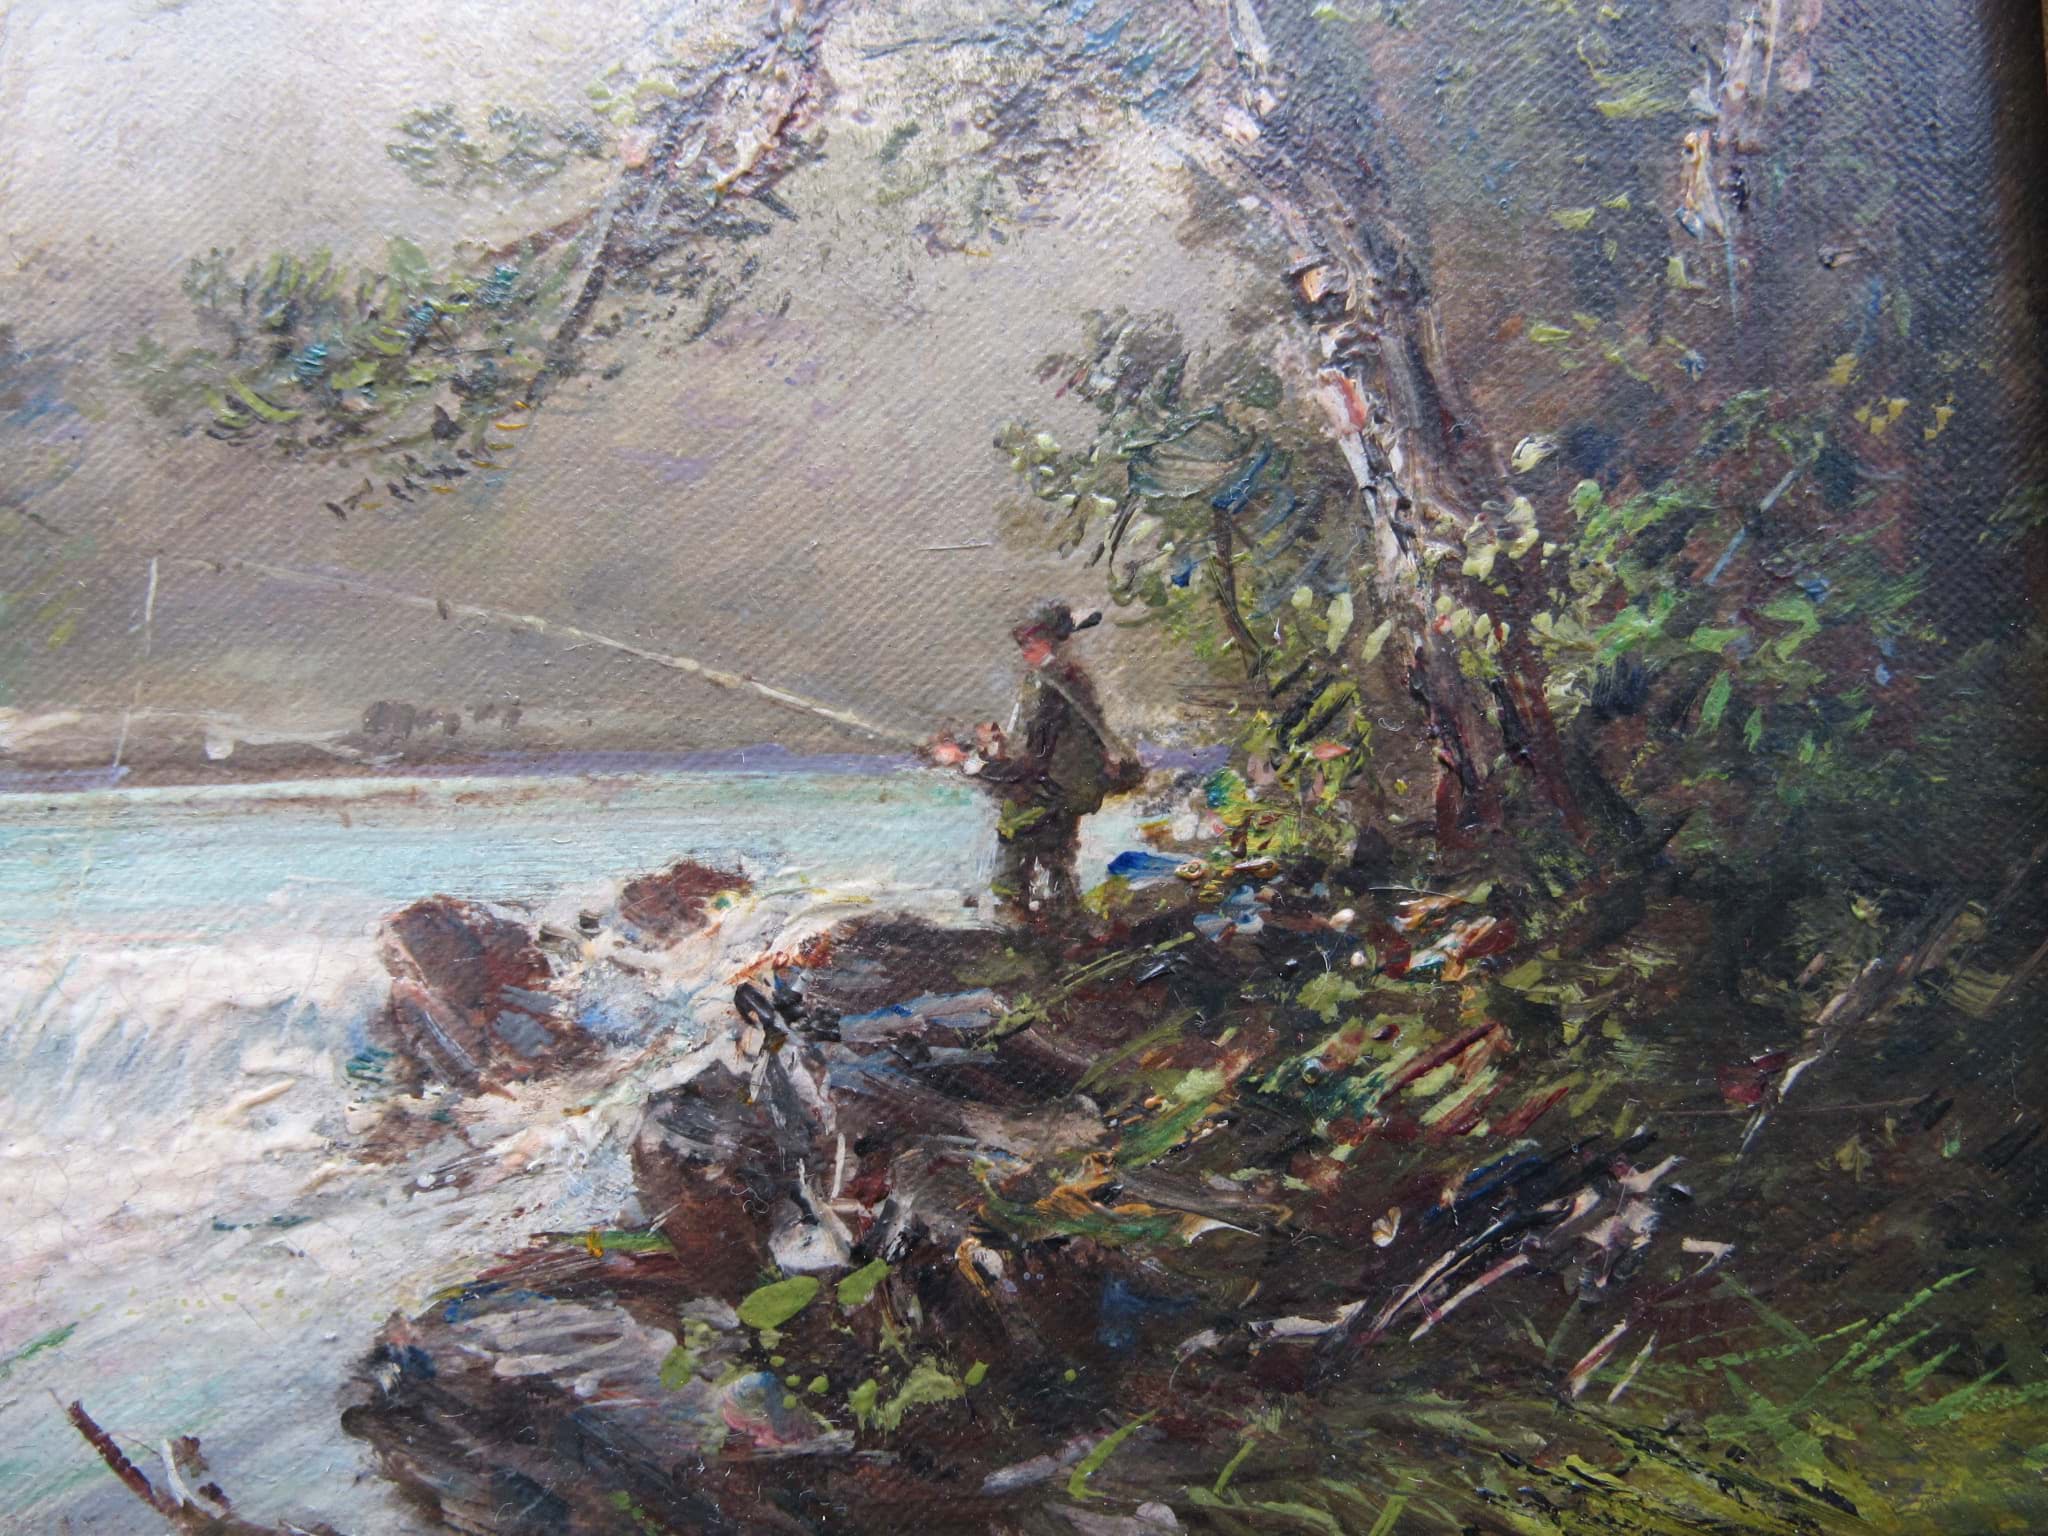 Bild av Gemälde Landschaft, Angler am Fluss, Öl/Leinwand, unbekannter Künstler des 20. Jahrhundert, signiert
